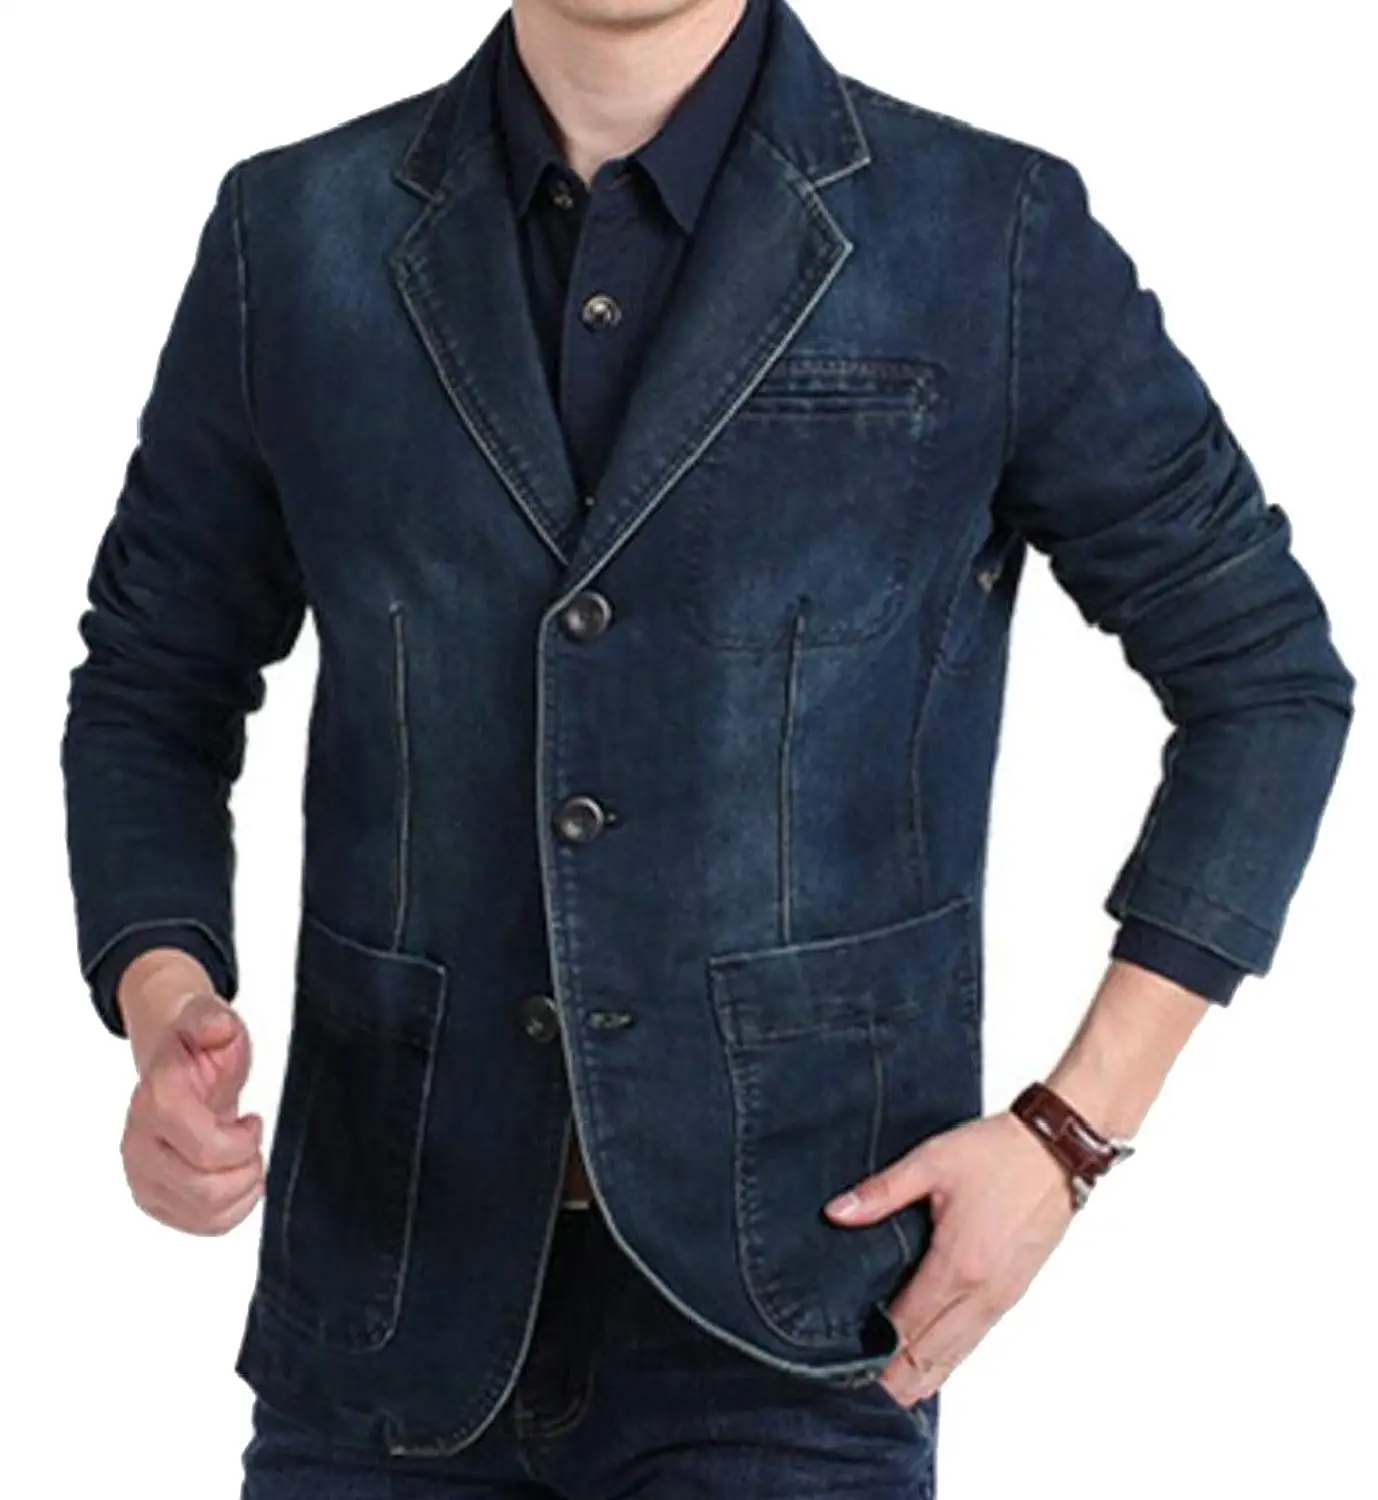 Cheap Full Denim Suit, find Full Denim Suit deals on line at Alibaba.com